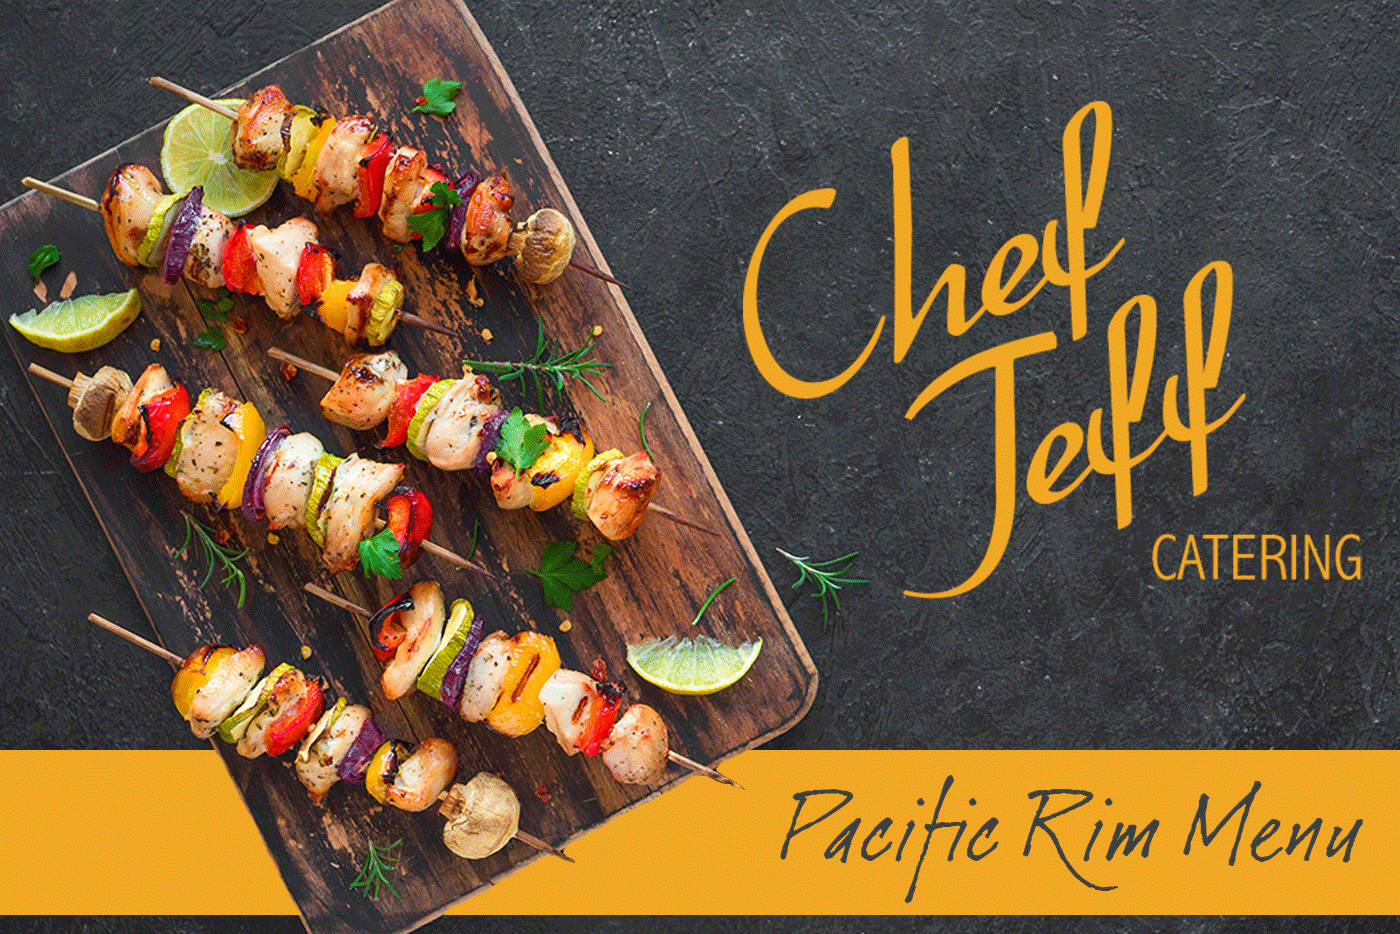 http://www.chef-jeff.com/wp-content/uploads/2019/06/Pacific_Rim_Menu-1400x934.gif